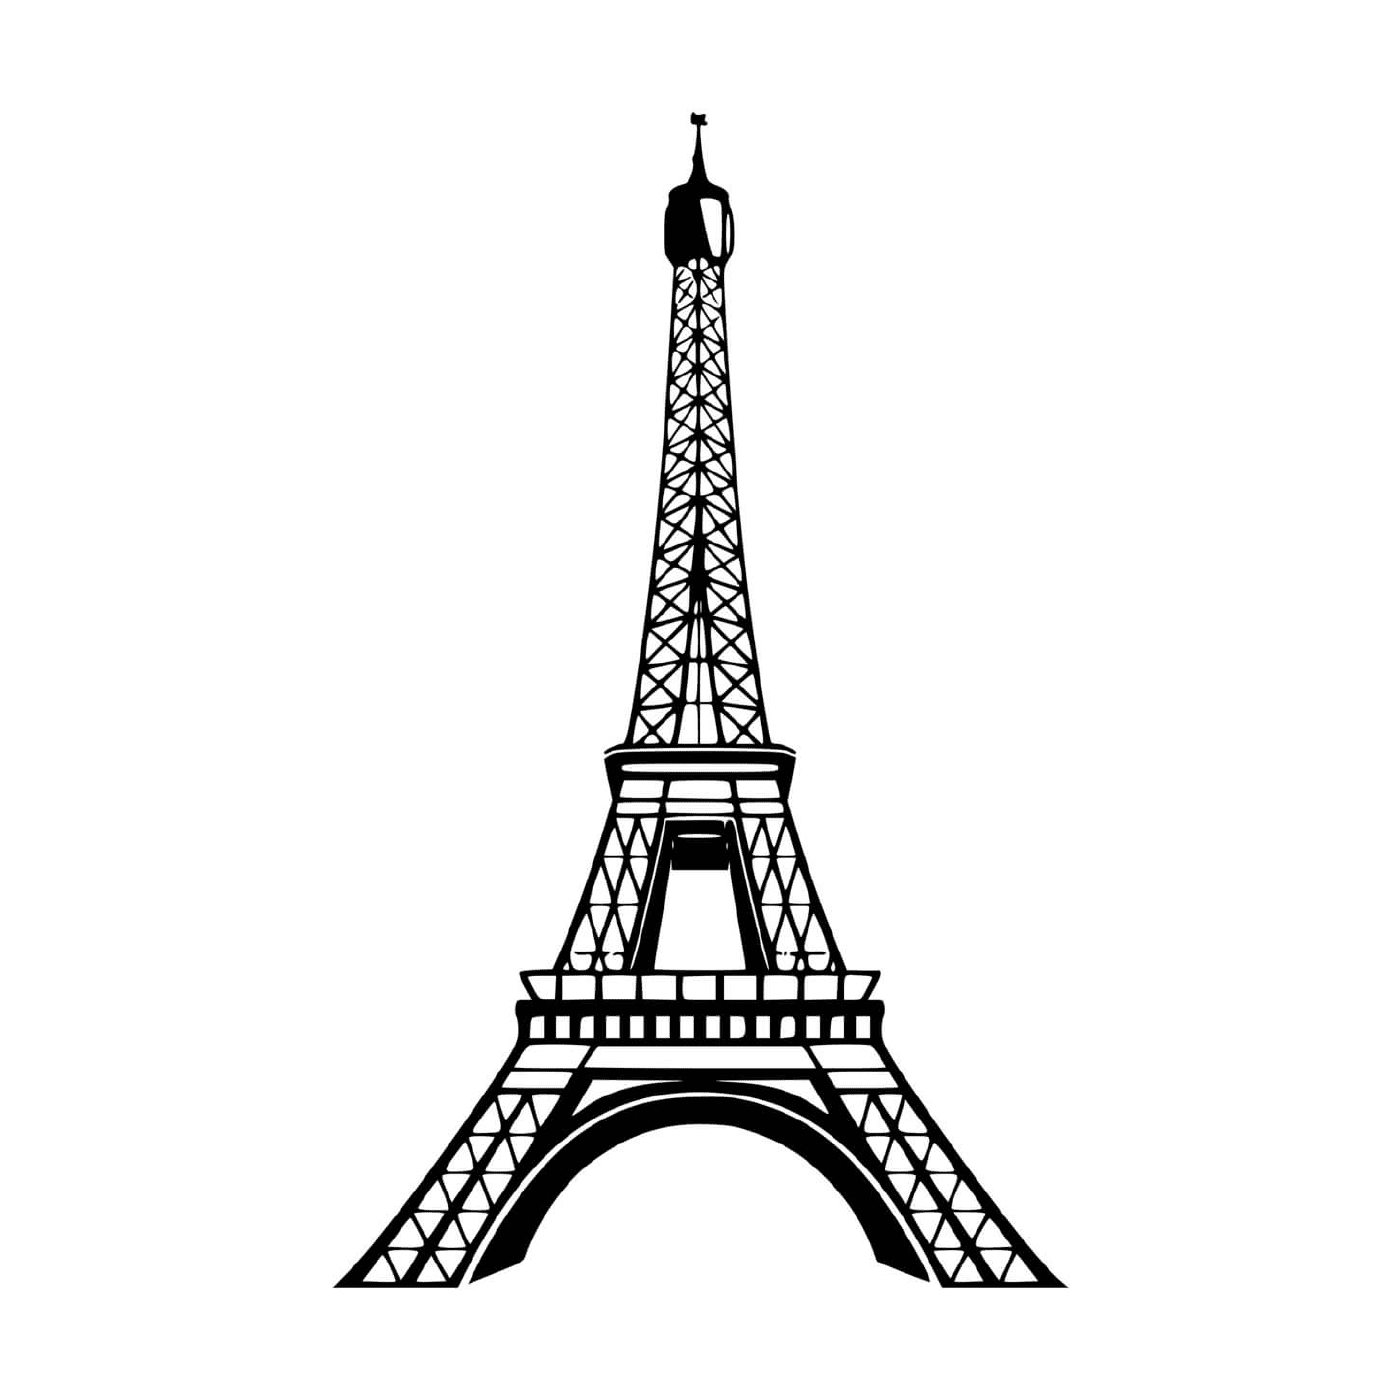  emblema ufficiale della Torre Eiffel Parigi 